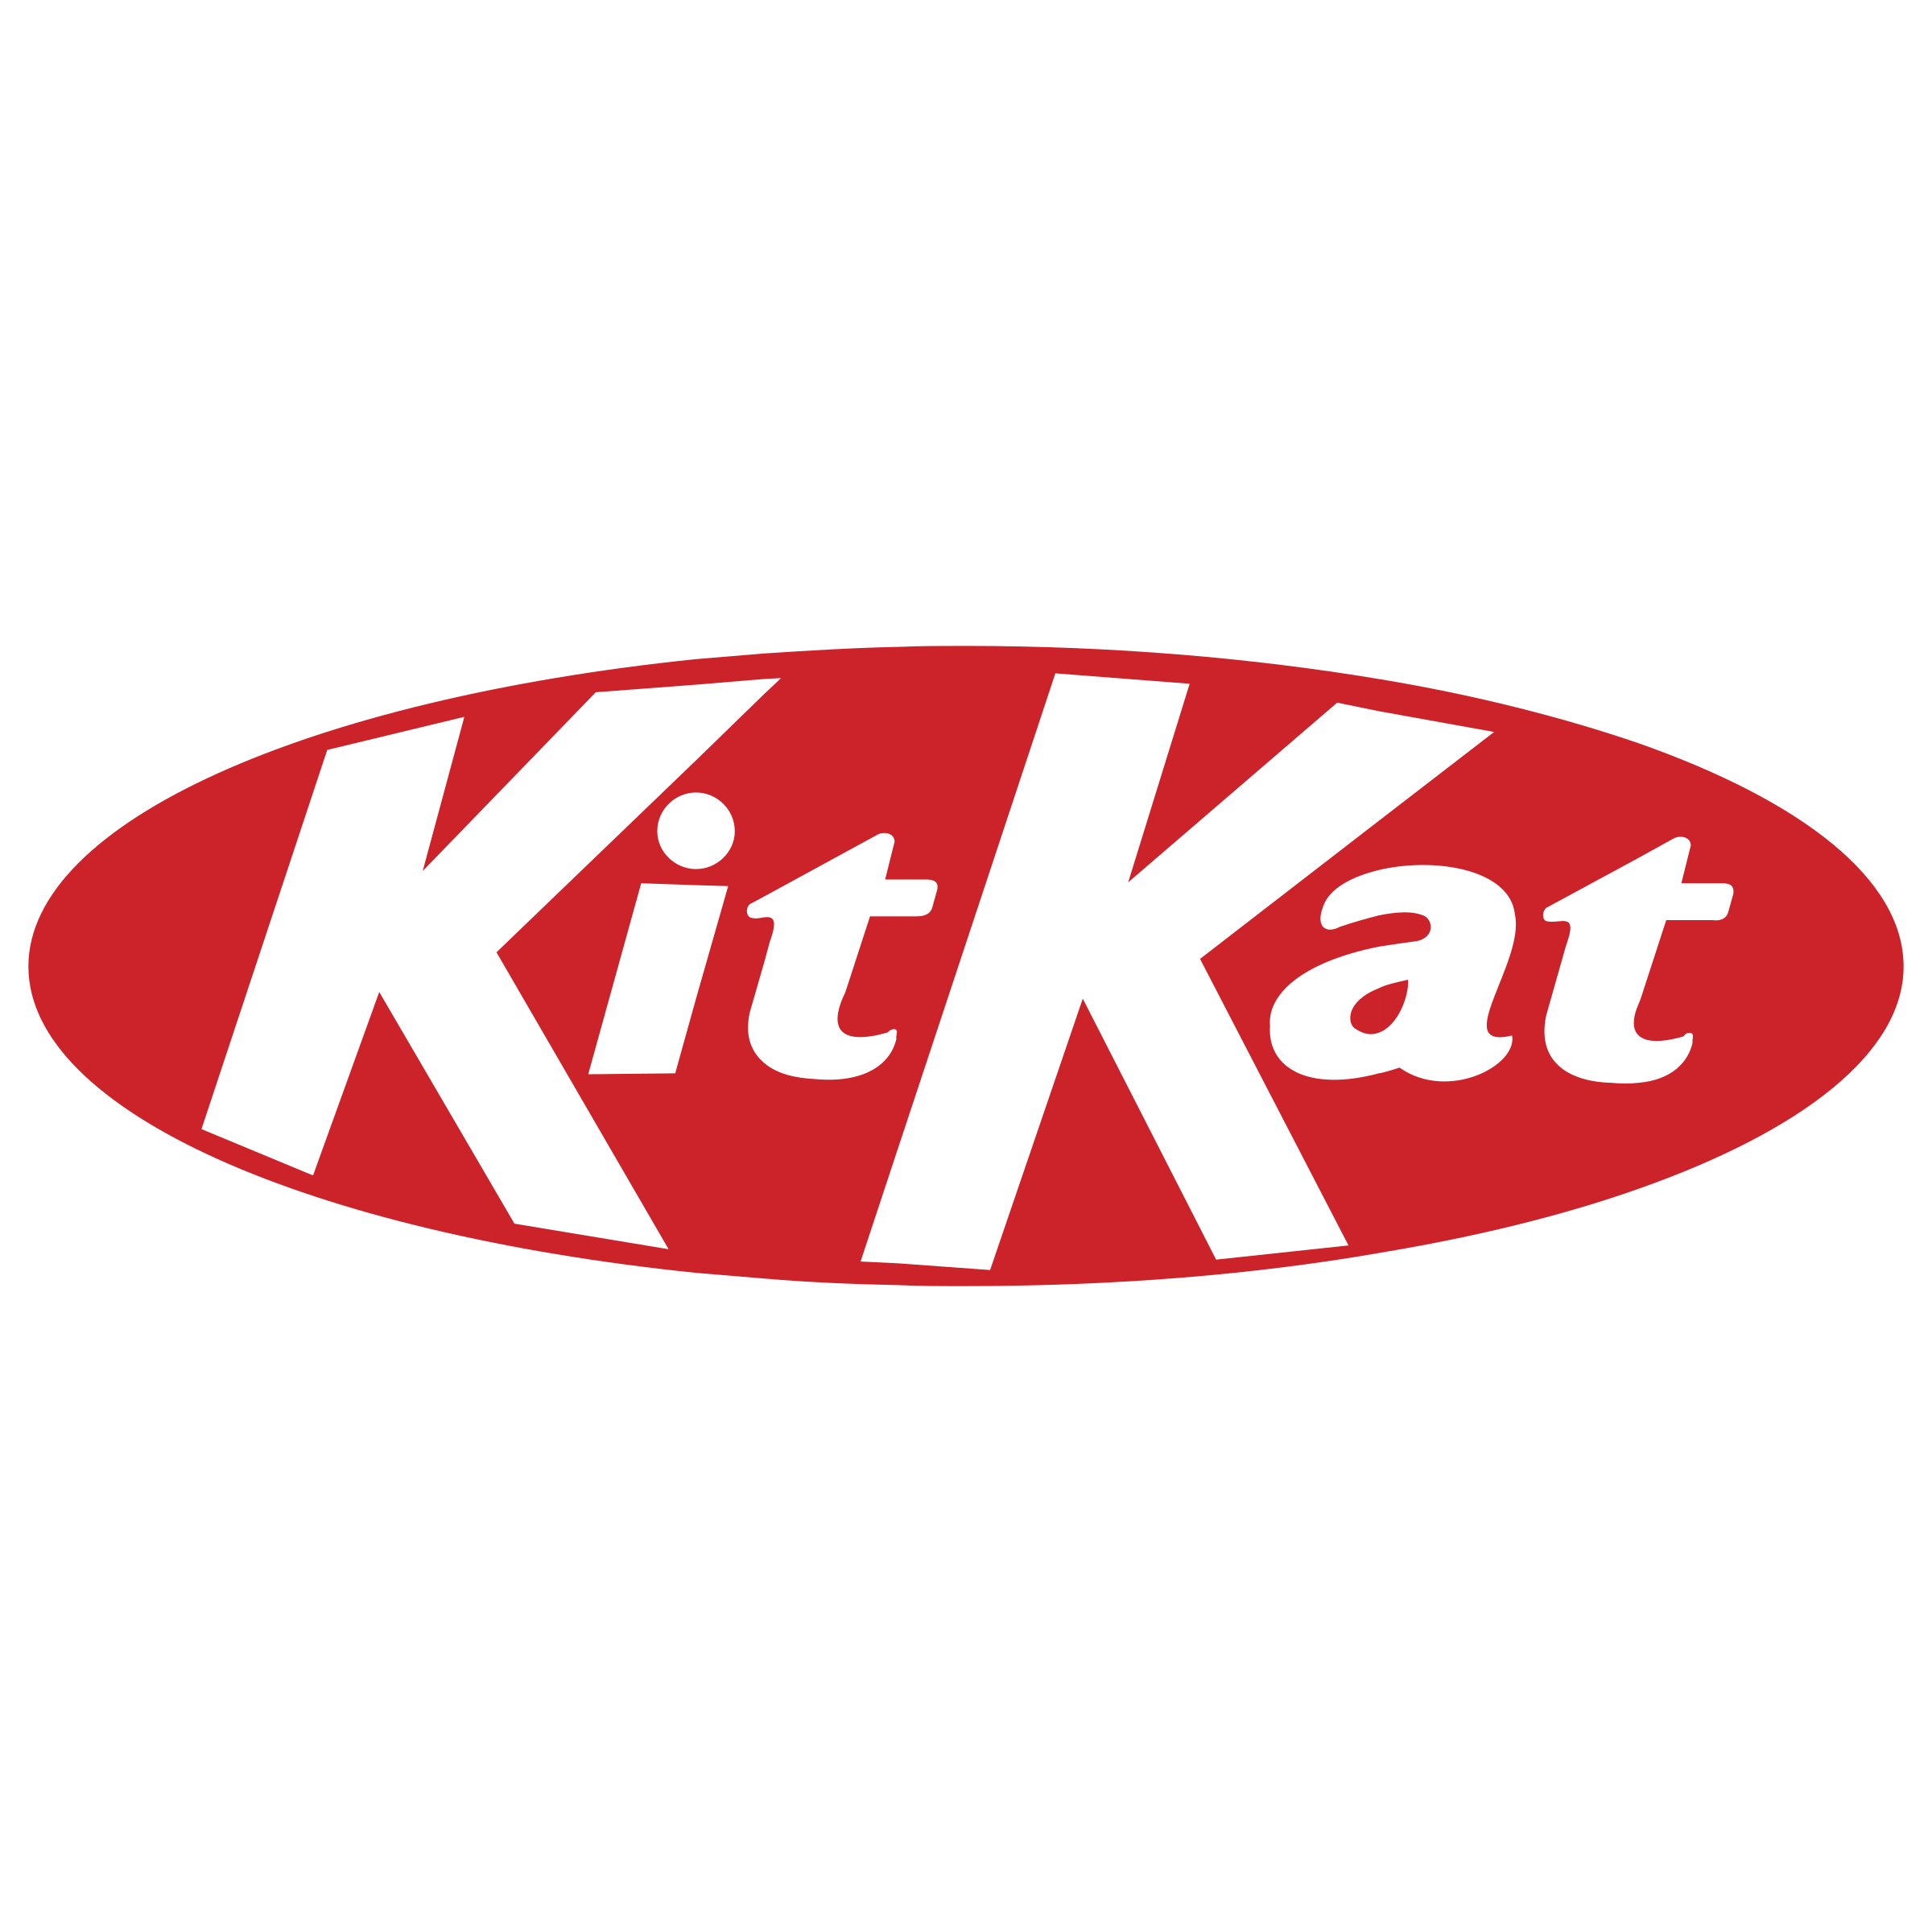 Kit Kat Logo - Kitkat Logo PNG Transparent & SVG Vector - Freebie Supply